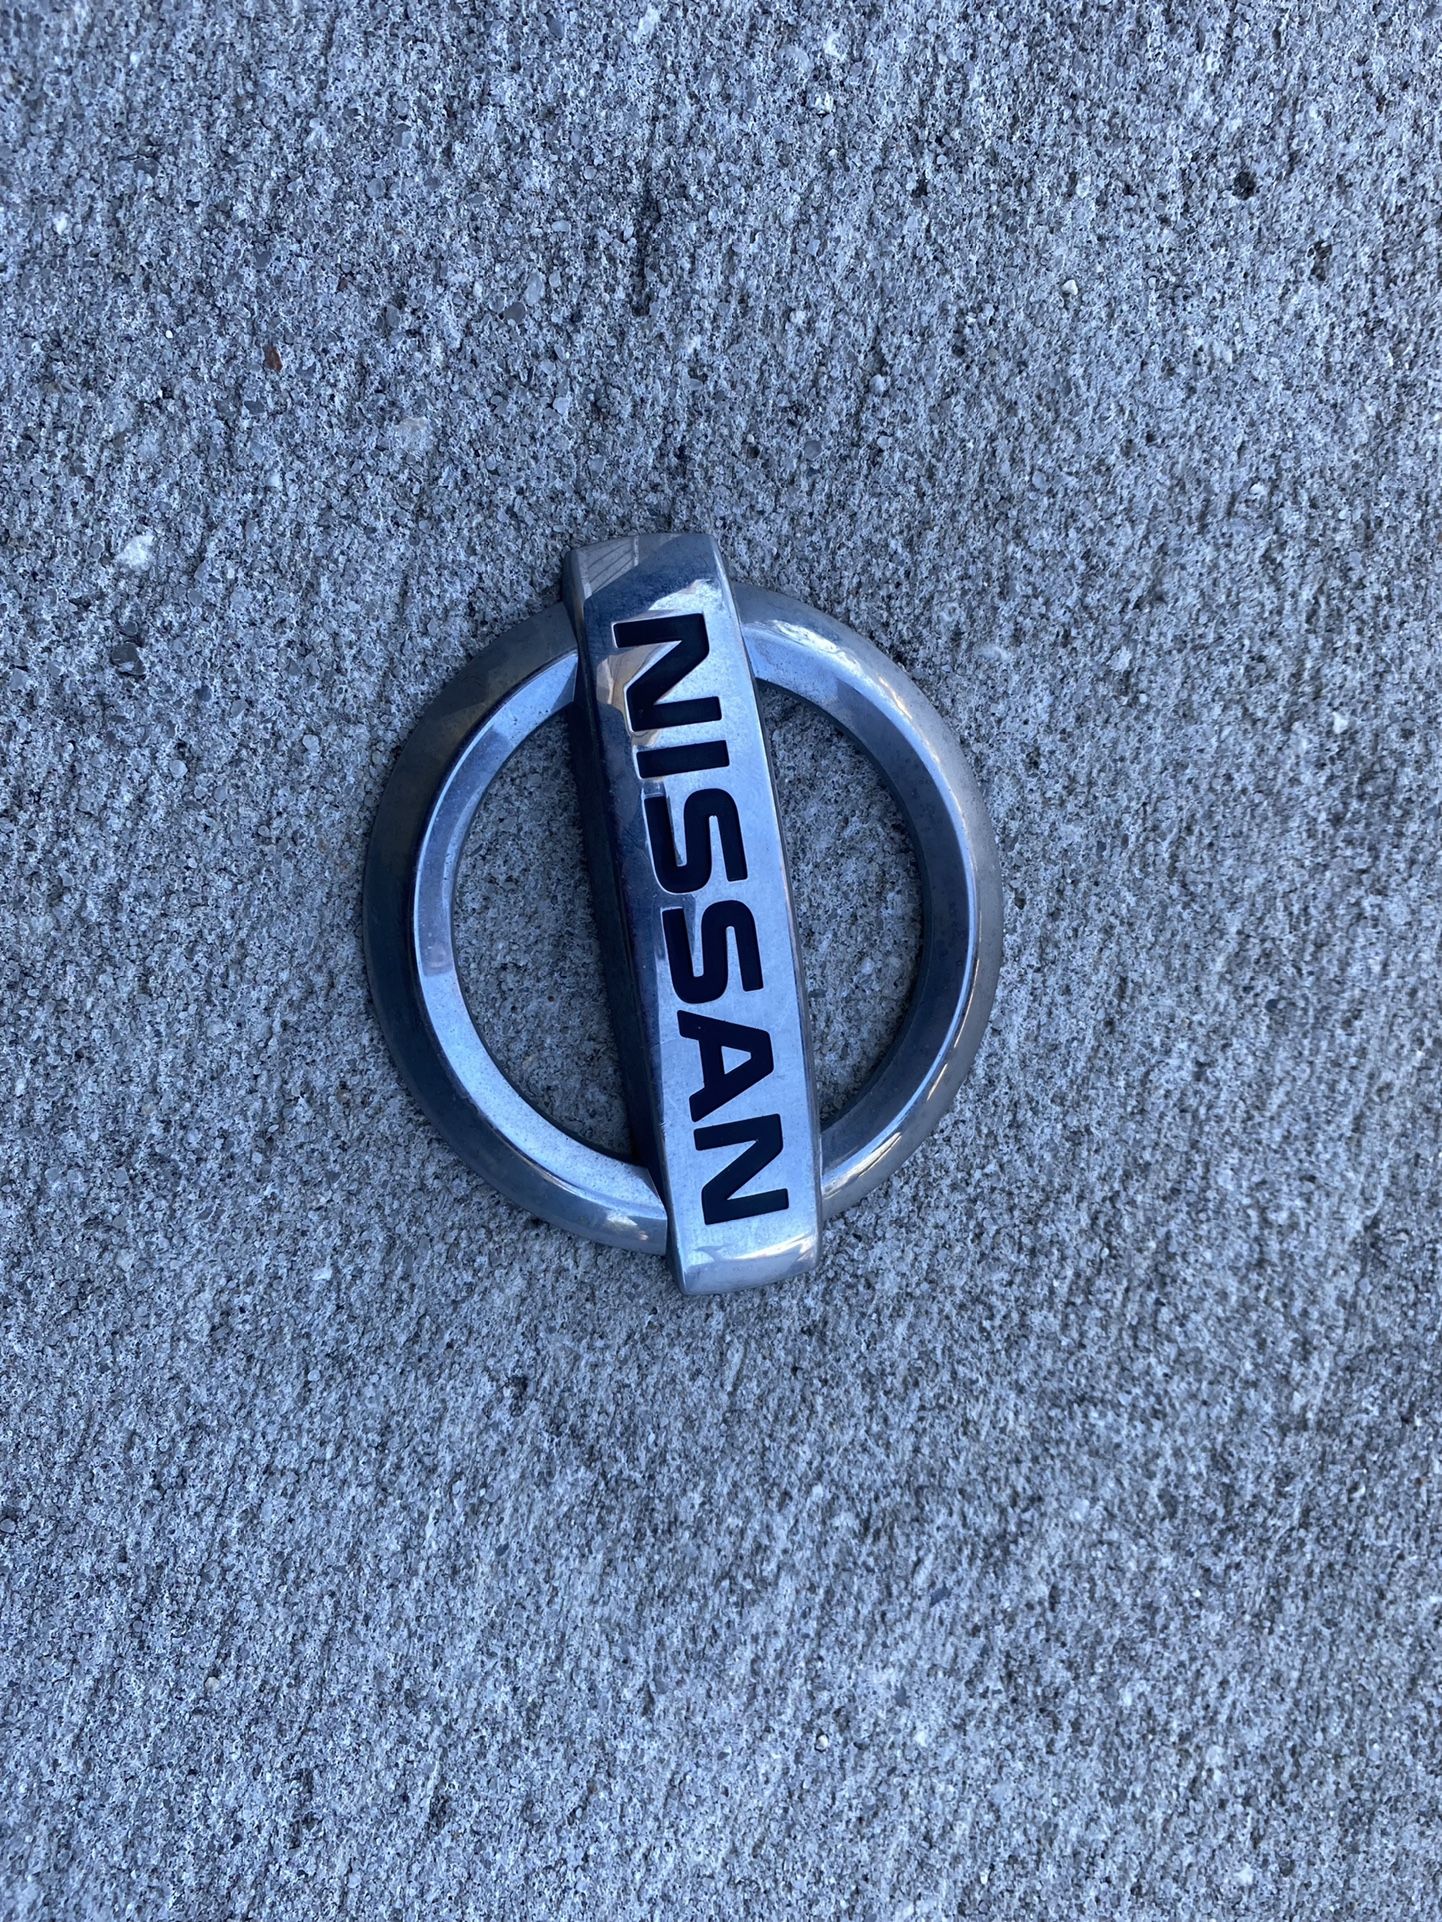 Rear Nissan Sentra Emblem Symbol